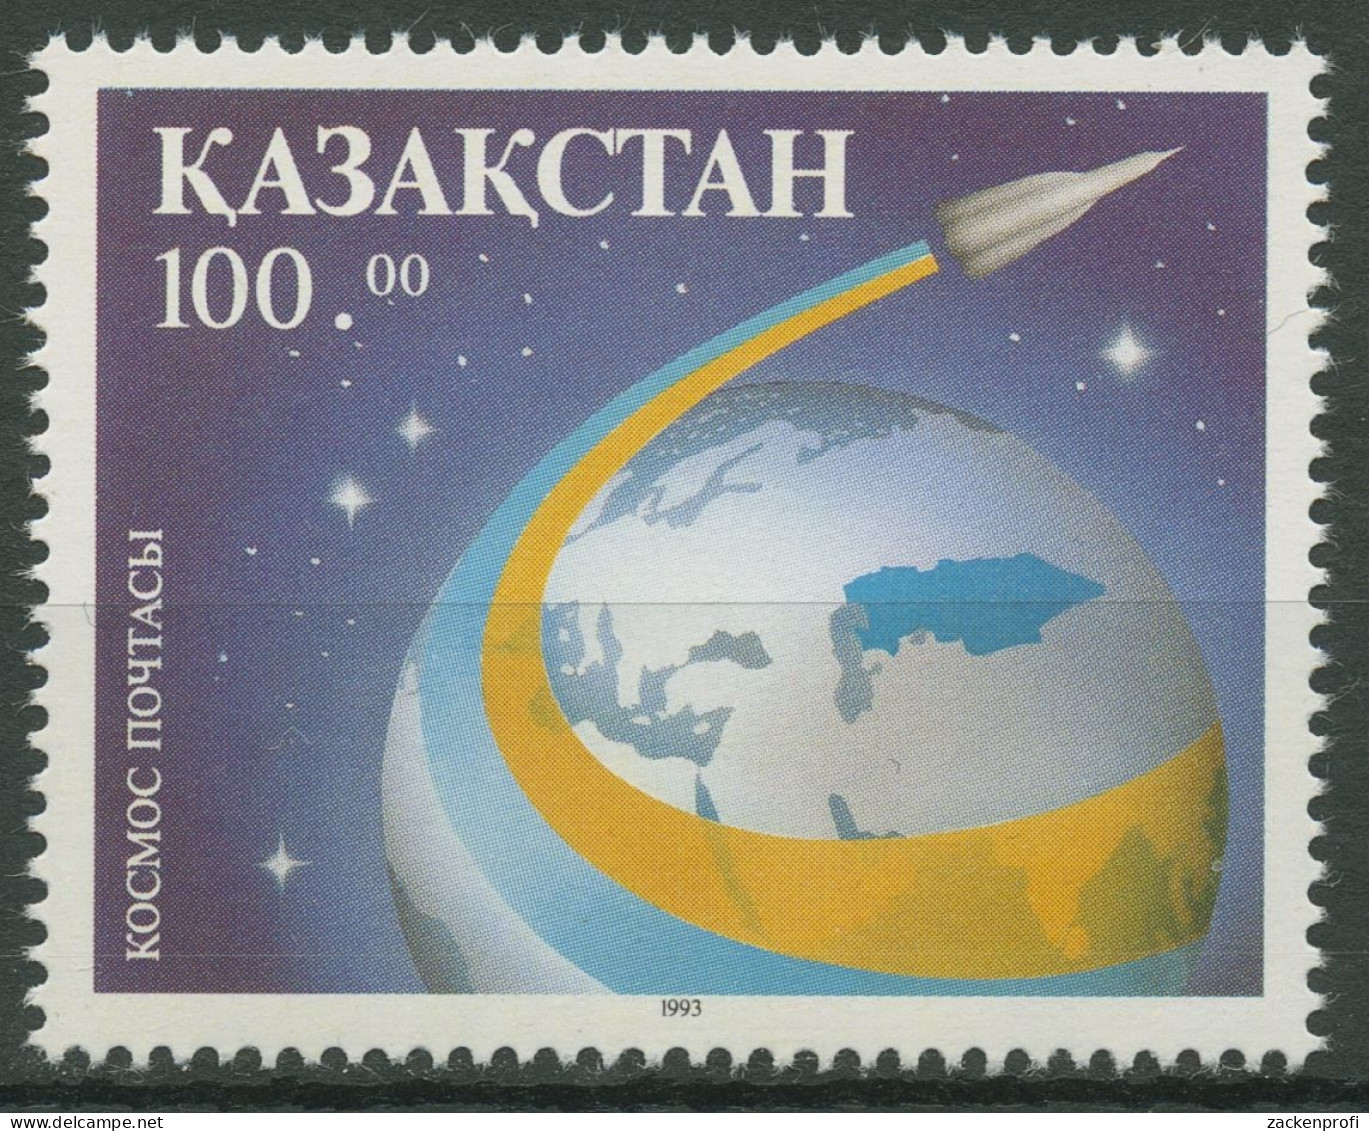 Kasachstan 1993 Kosmische Post Erdkugel 25 Postfrisch - Kazakistan